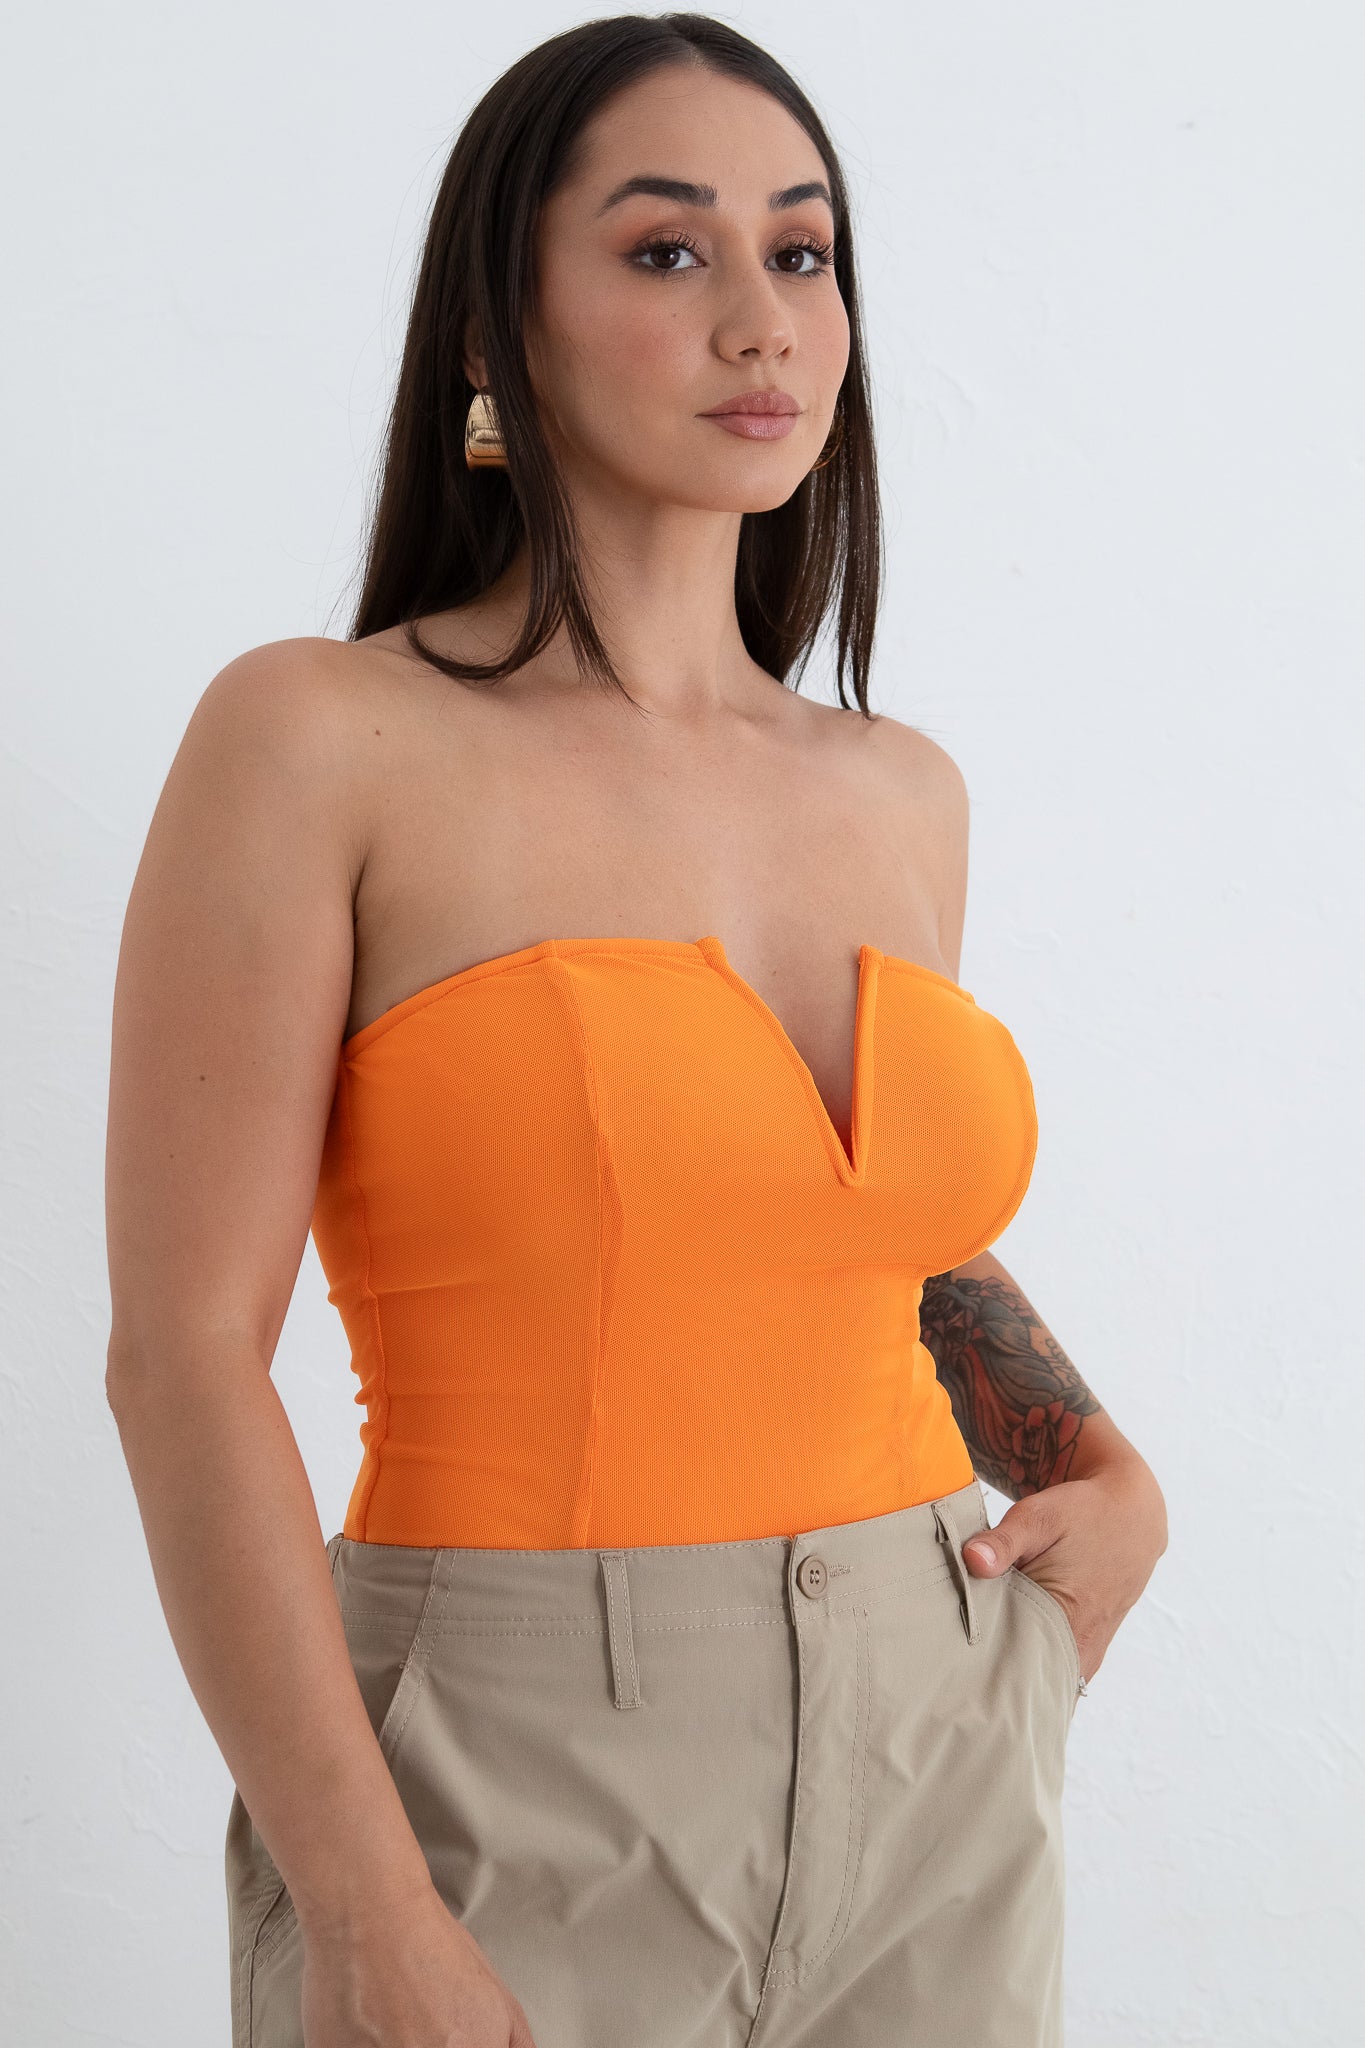 Monaco Chic - Orange Strapless Bodysuit